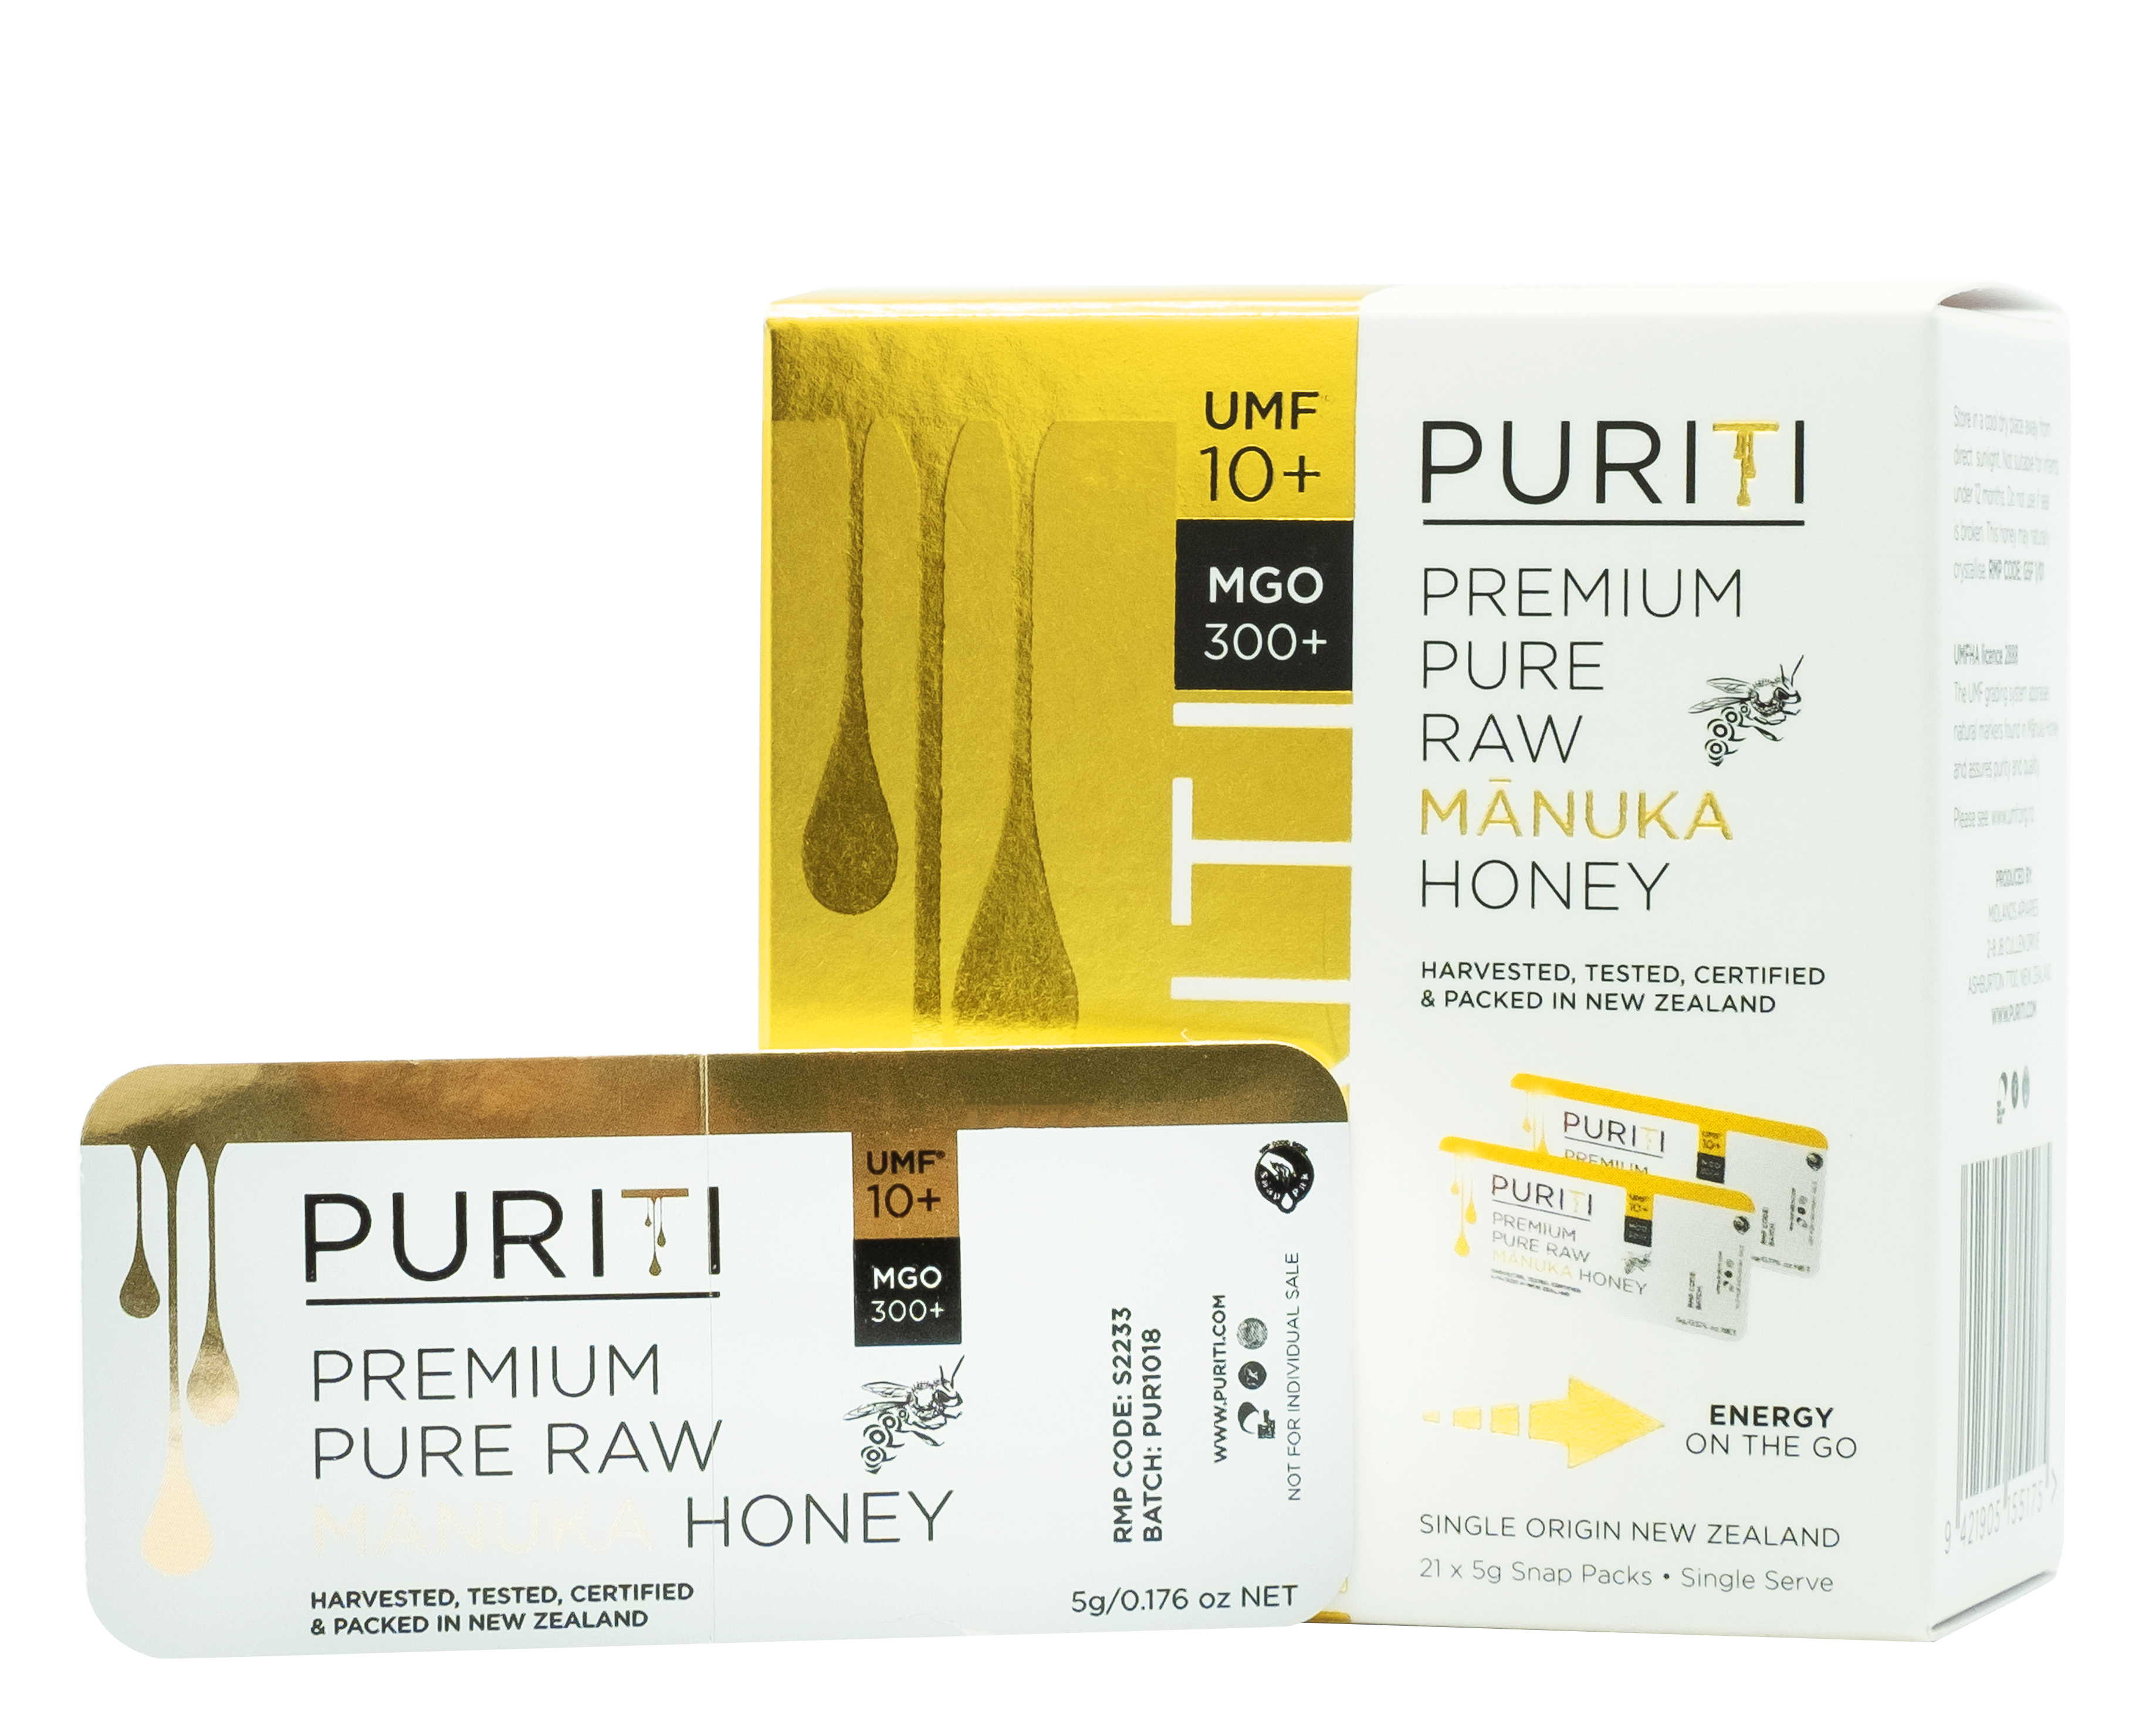 PURITI Manuka Honey UMF10+ Energy-on-the-go 21sachet - 365 Health Limited